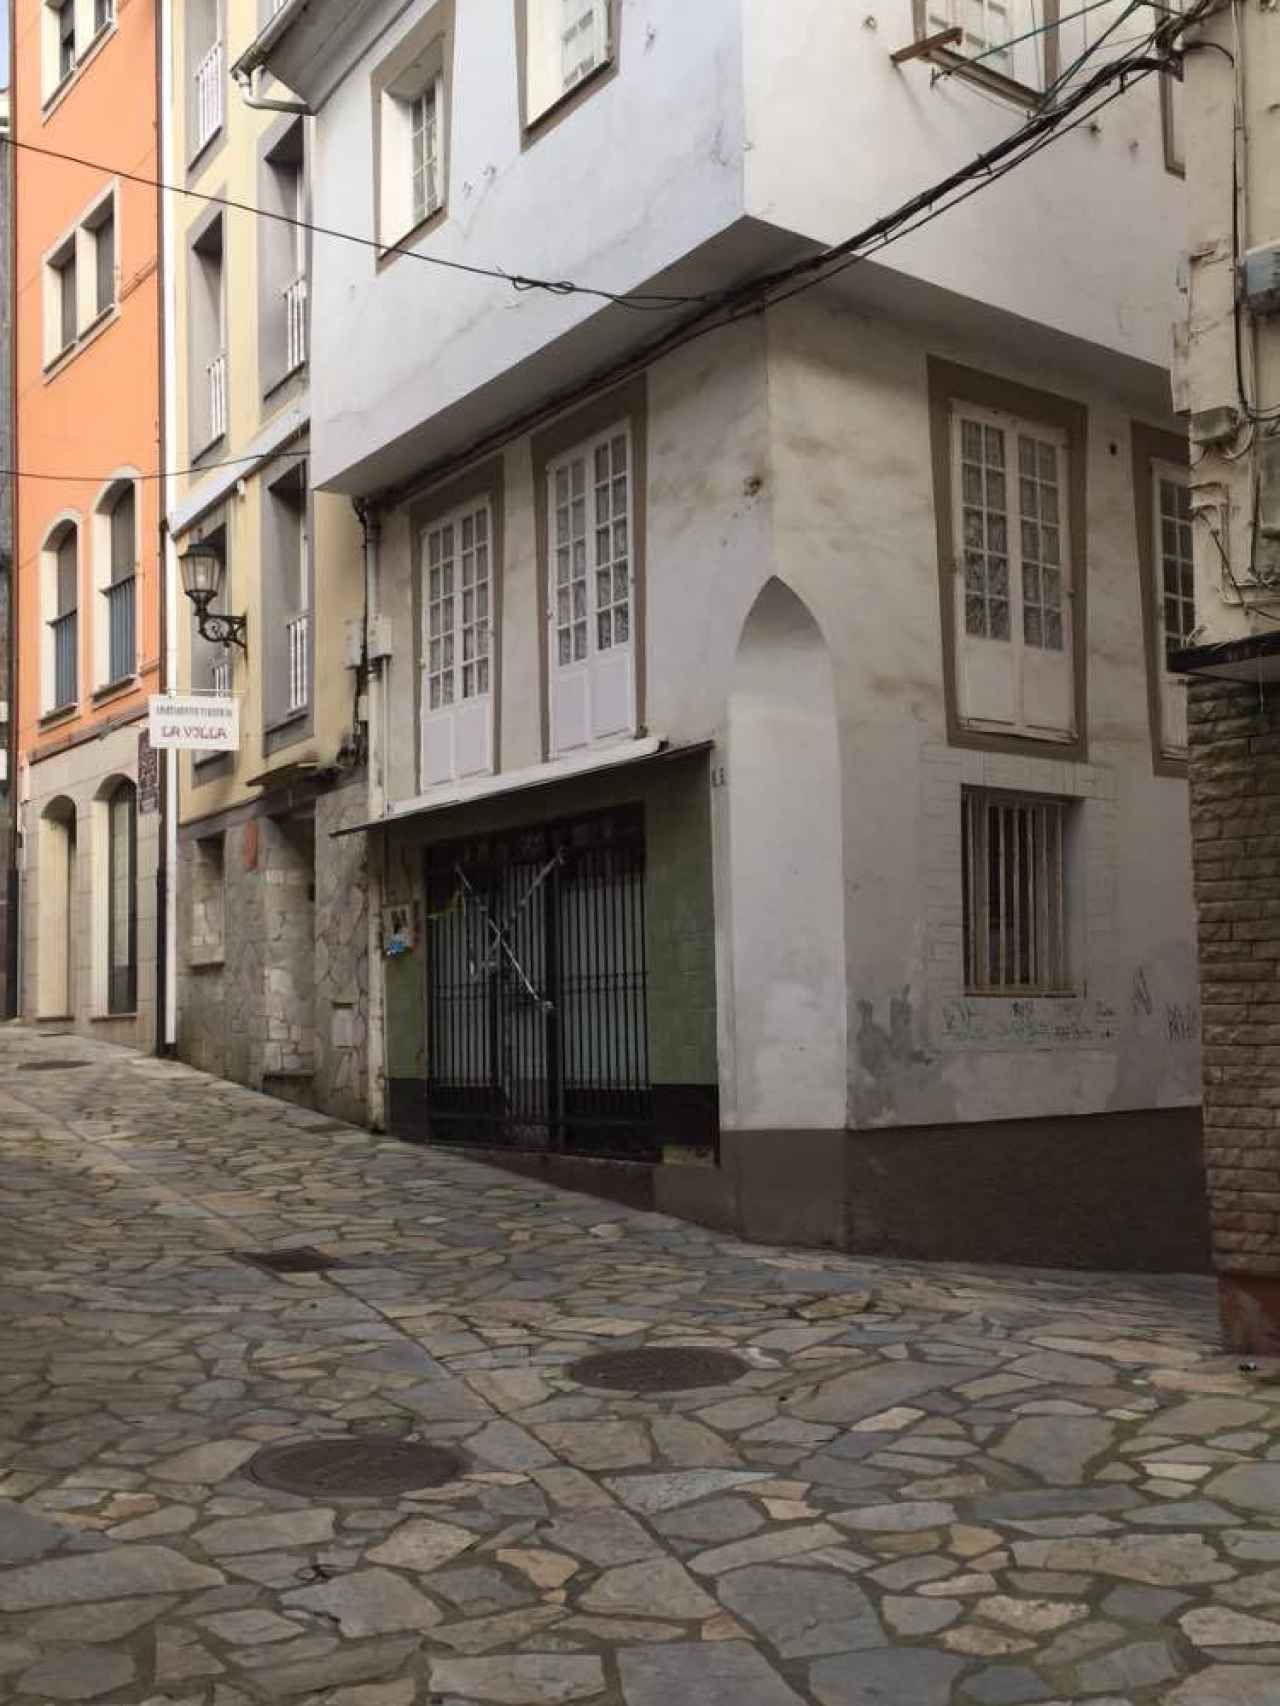 La vivienda donde Ledo mató a Paz está en una calle peatonal